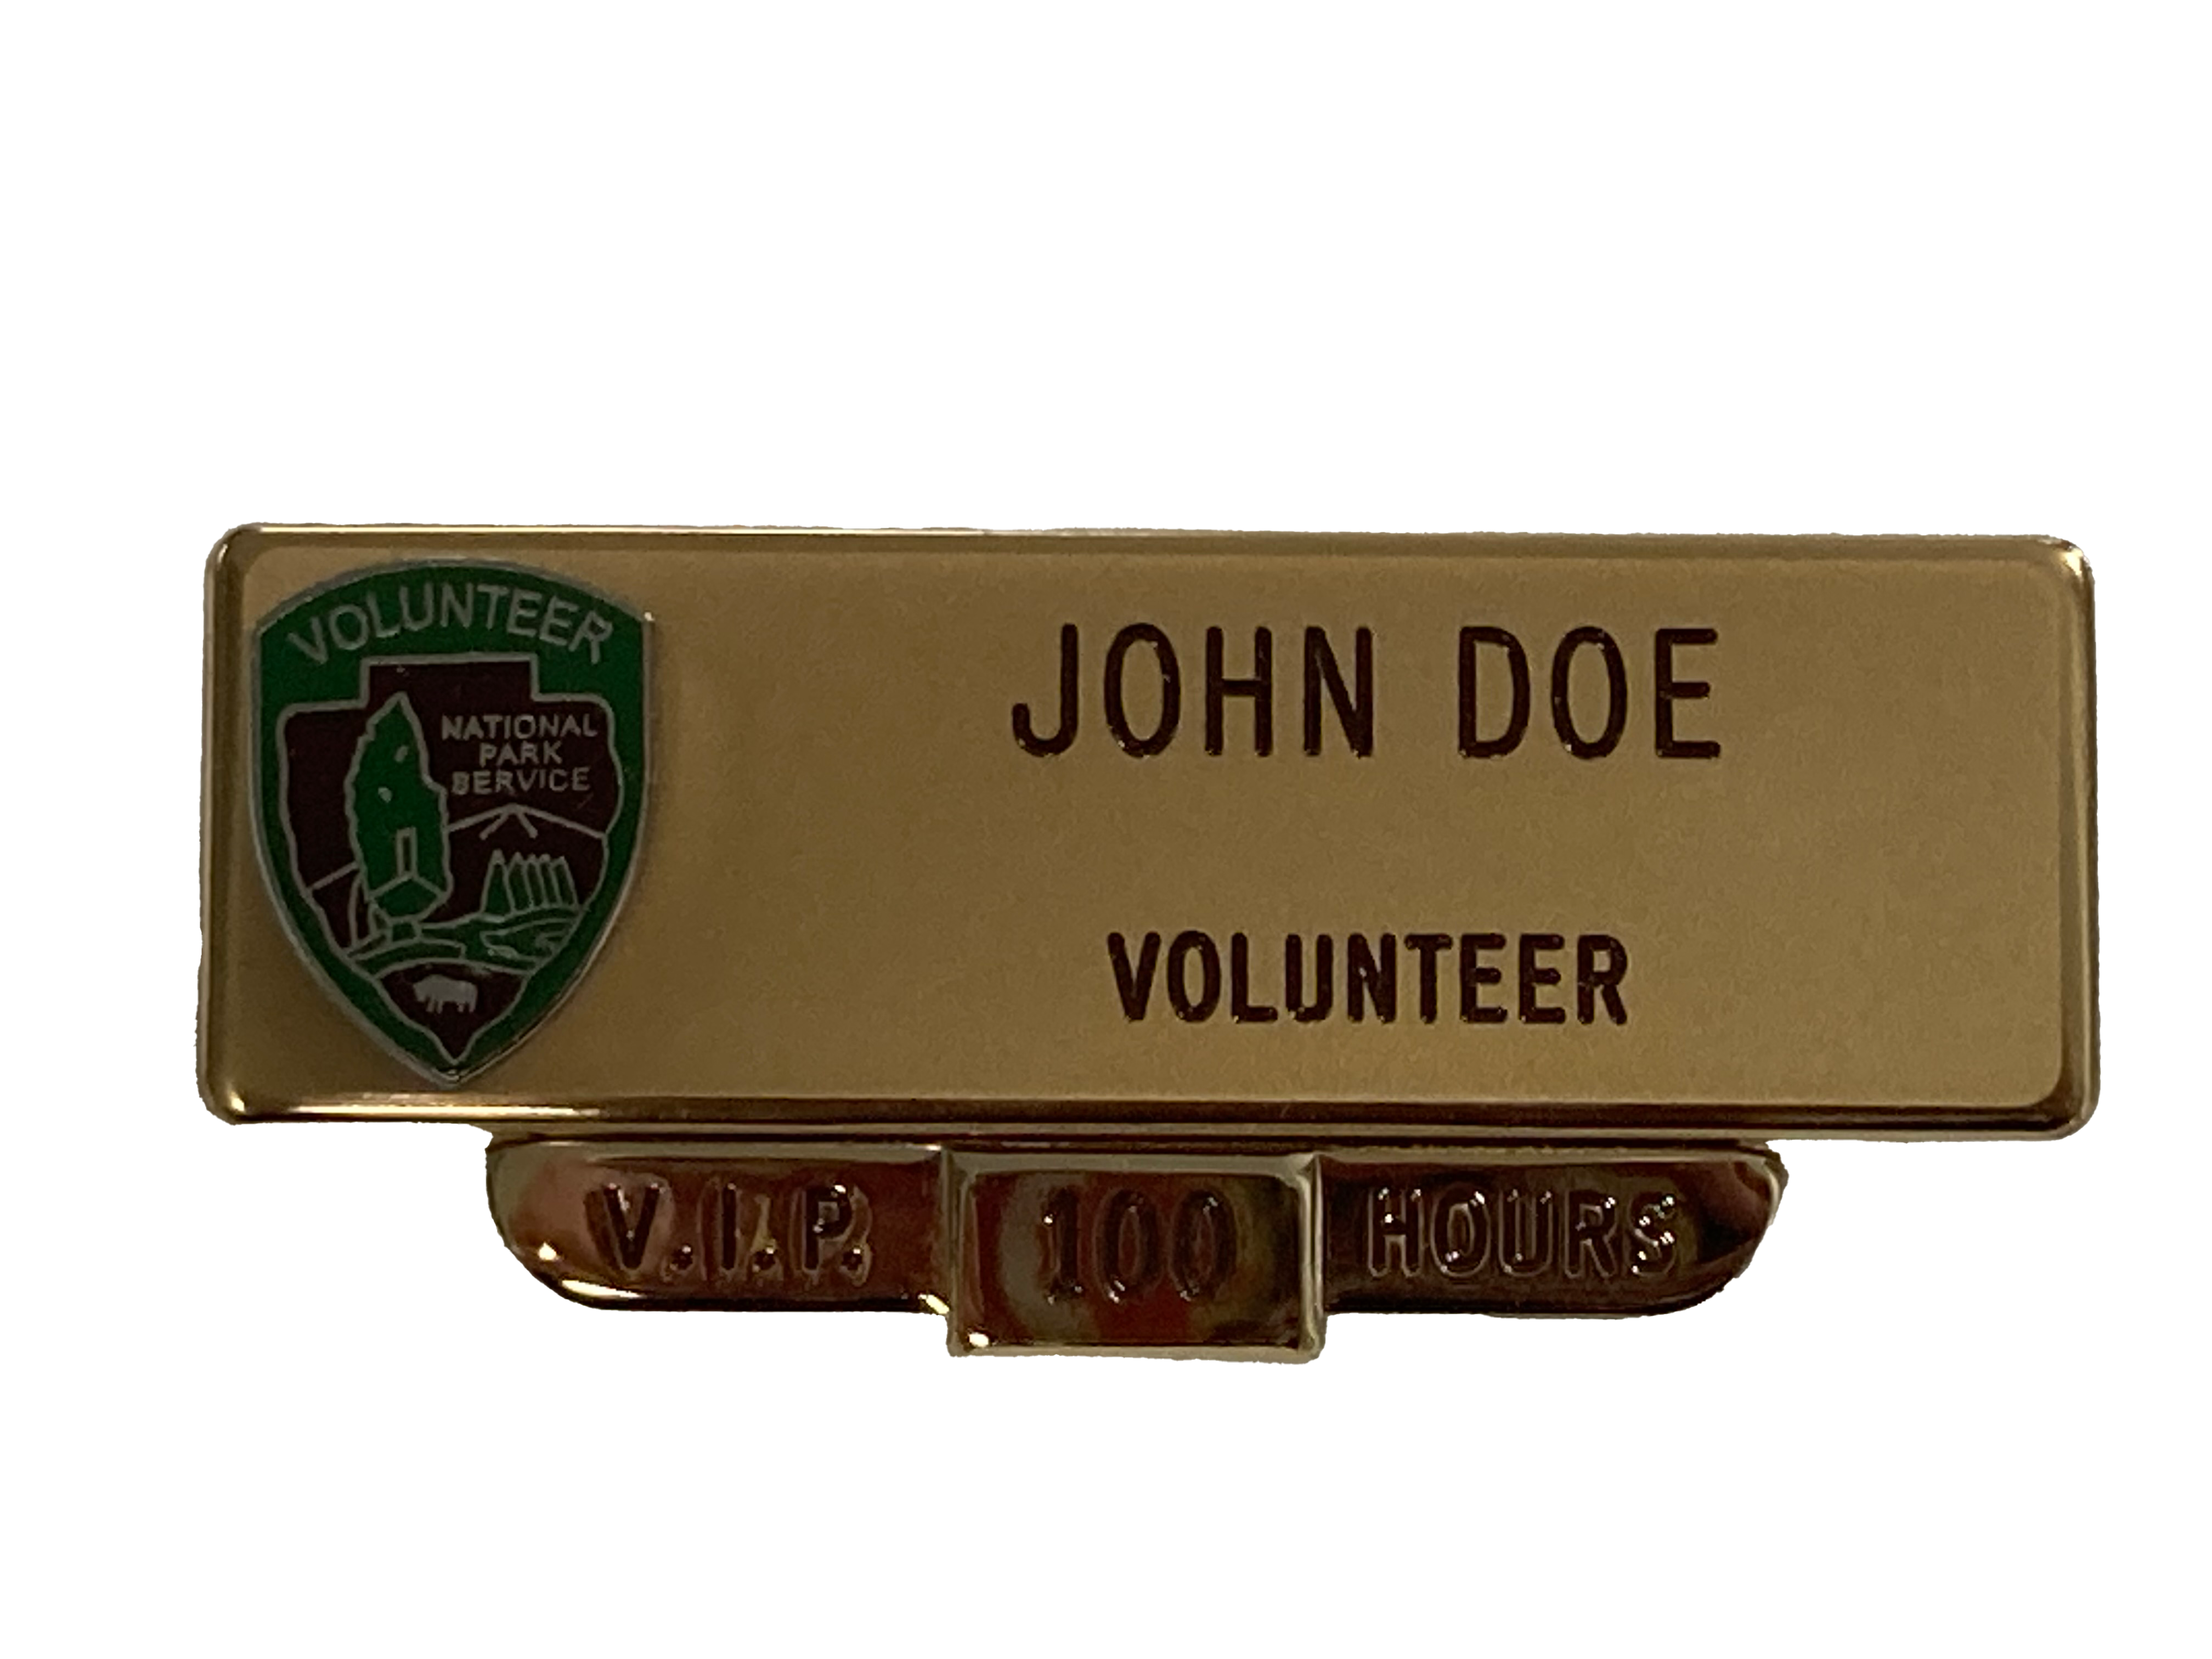 Volunteer badge "John Doe" with recognition for 100 hours below